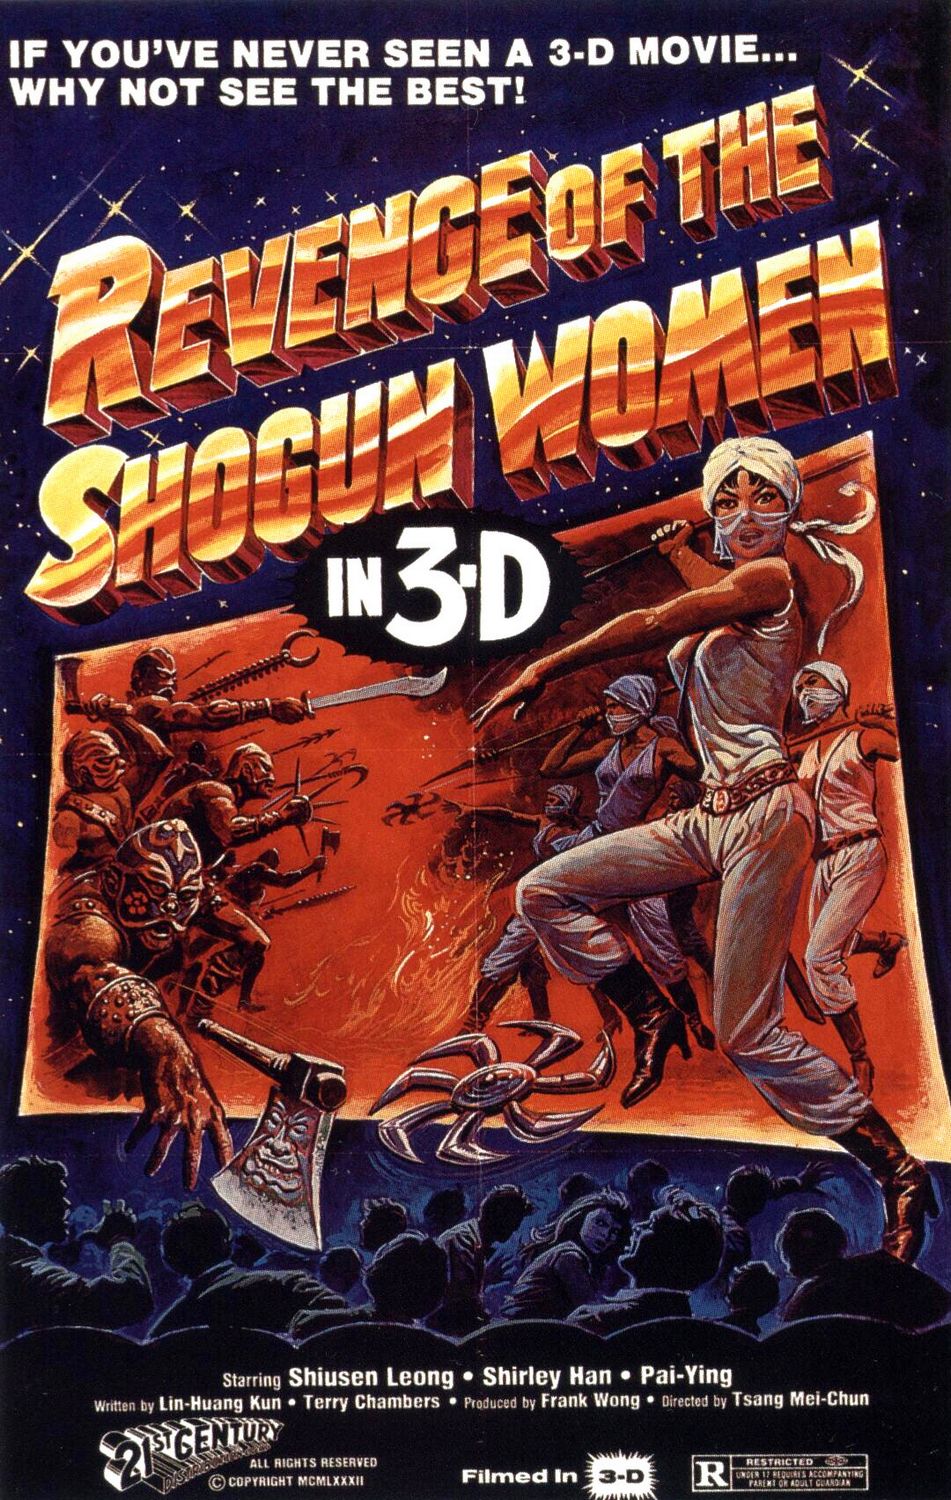 Extra Large Movie Poster Image for Revenge of the Shogun Women 